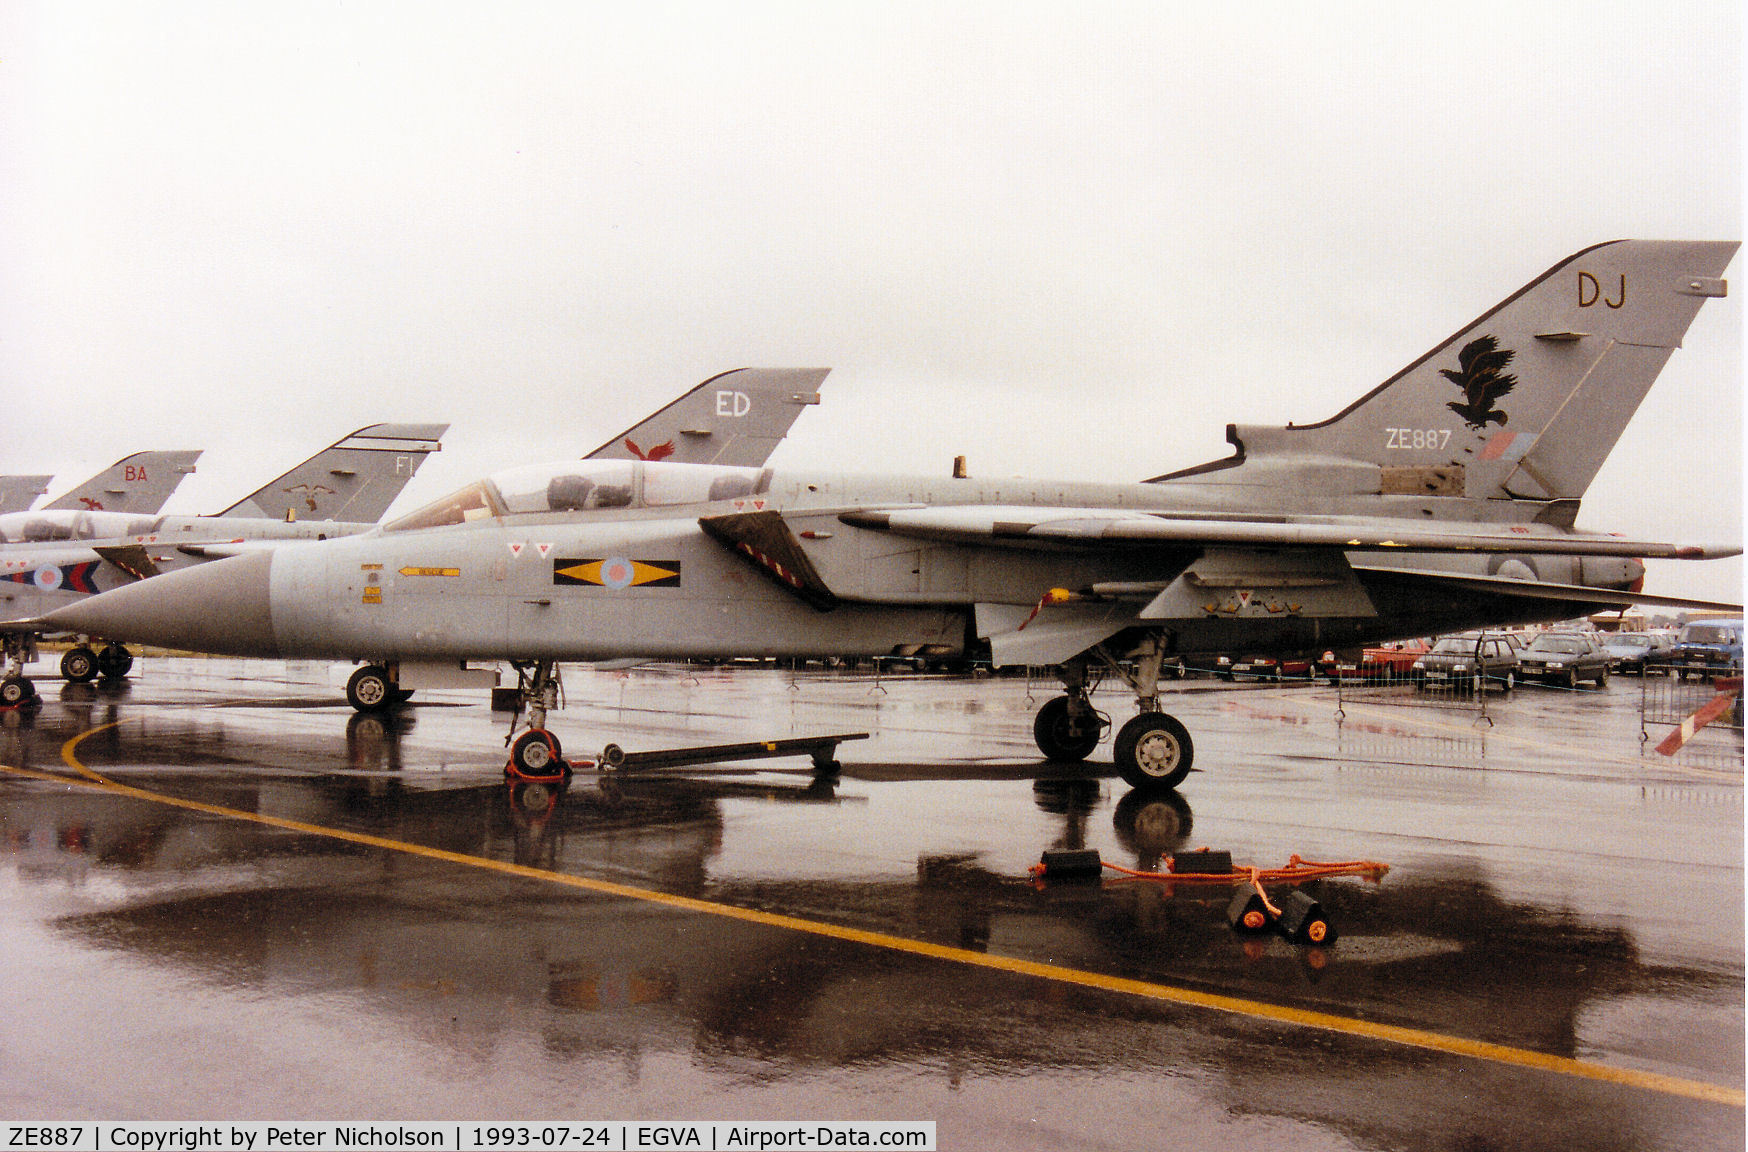 ZE887, 1988 Panavia Tornado F.3 C/N 3345, Tornado F.3, callsign Totem 1, of 11 Squadron at RAF Leeming on display at the 1993 Intnl Air Tattoo at RAF Fairford.